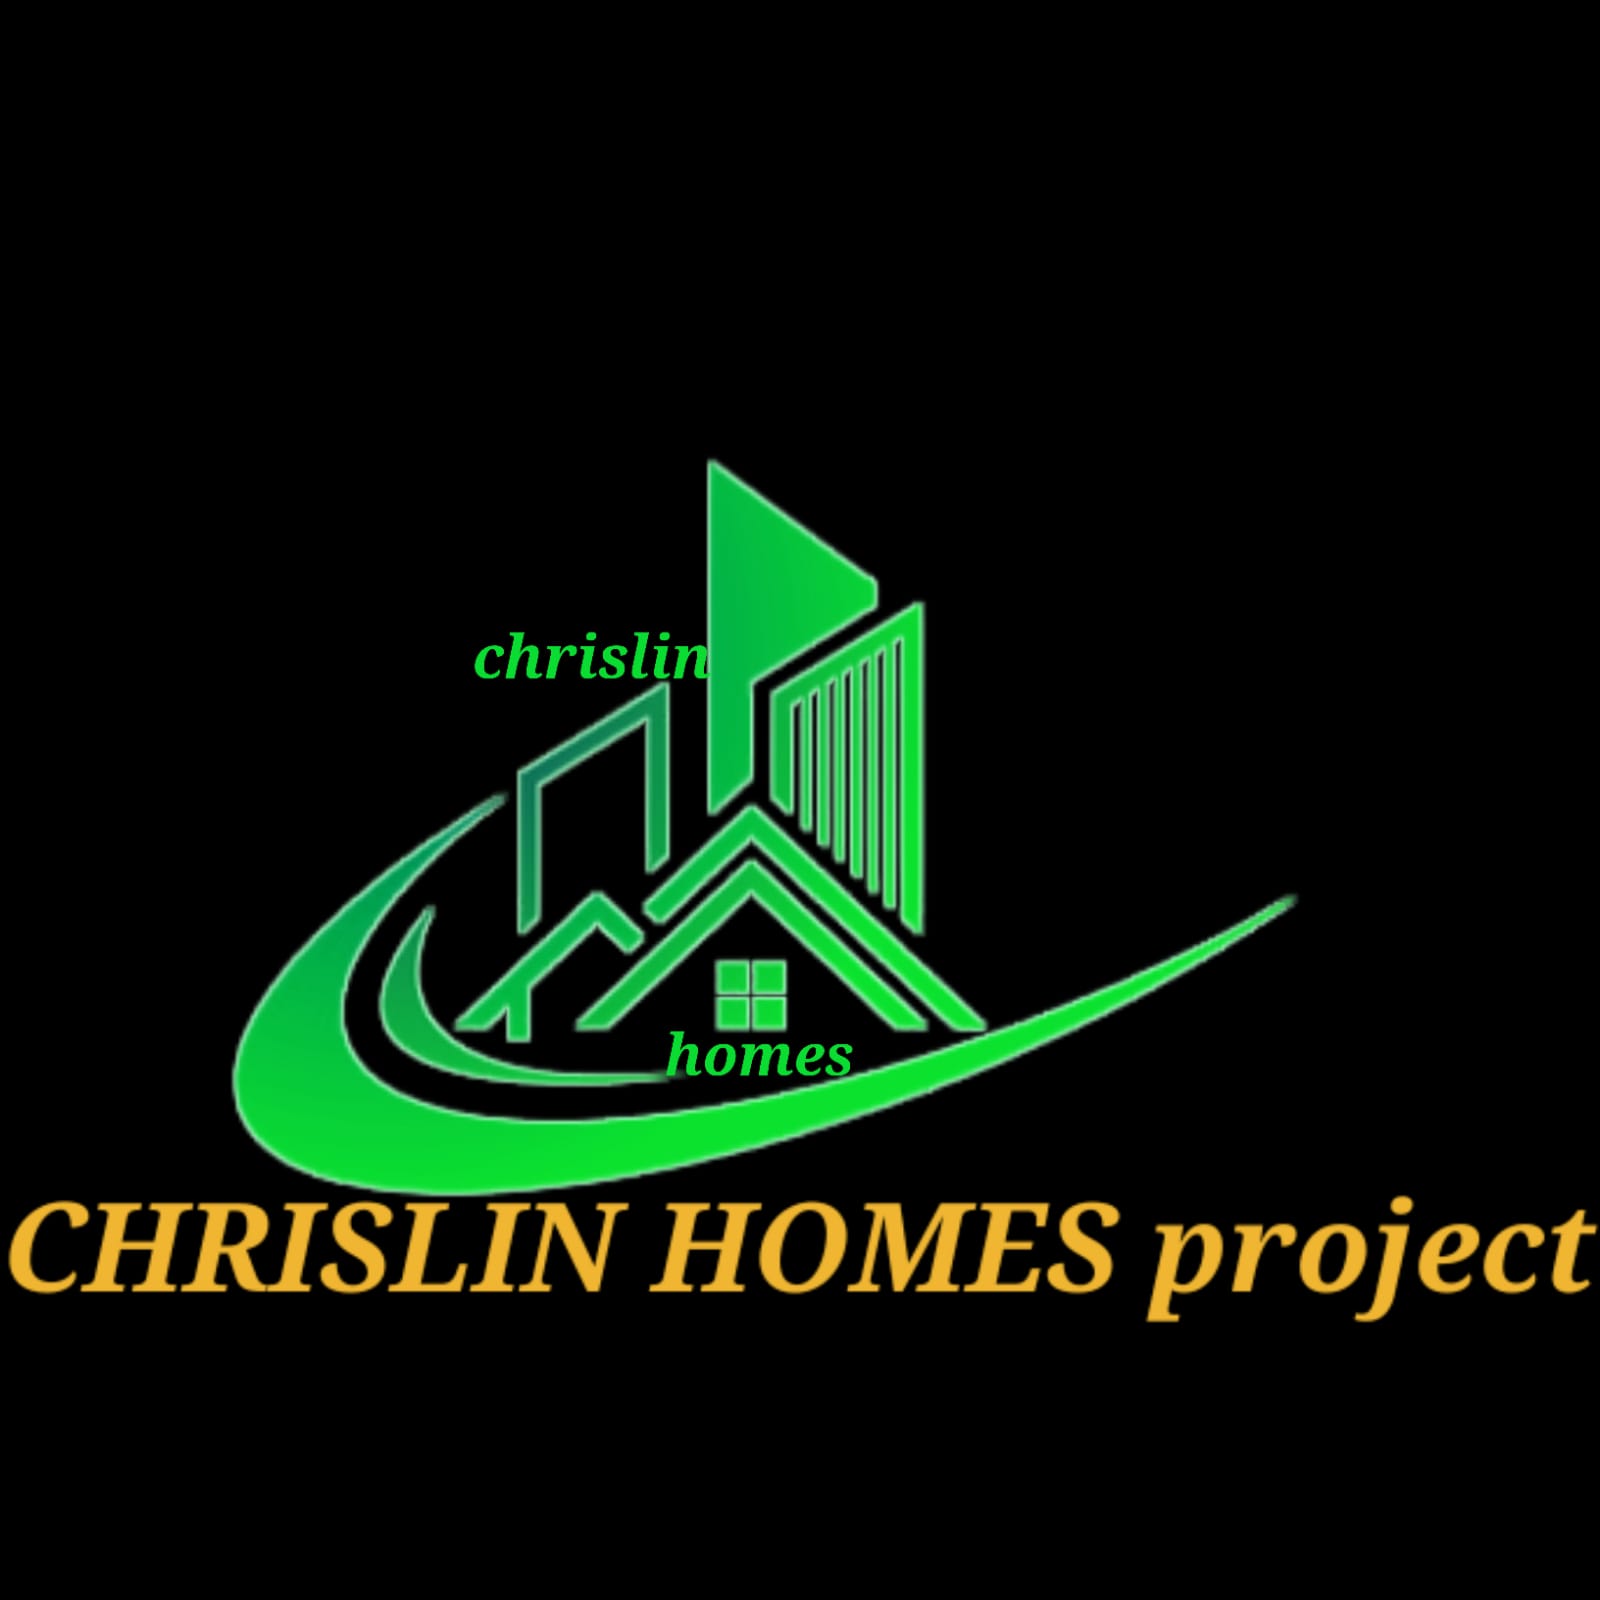 CHRISLIN HOMES PROJECT logo